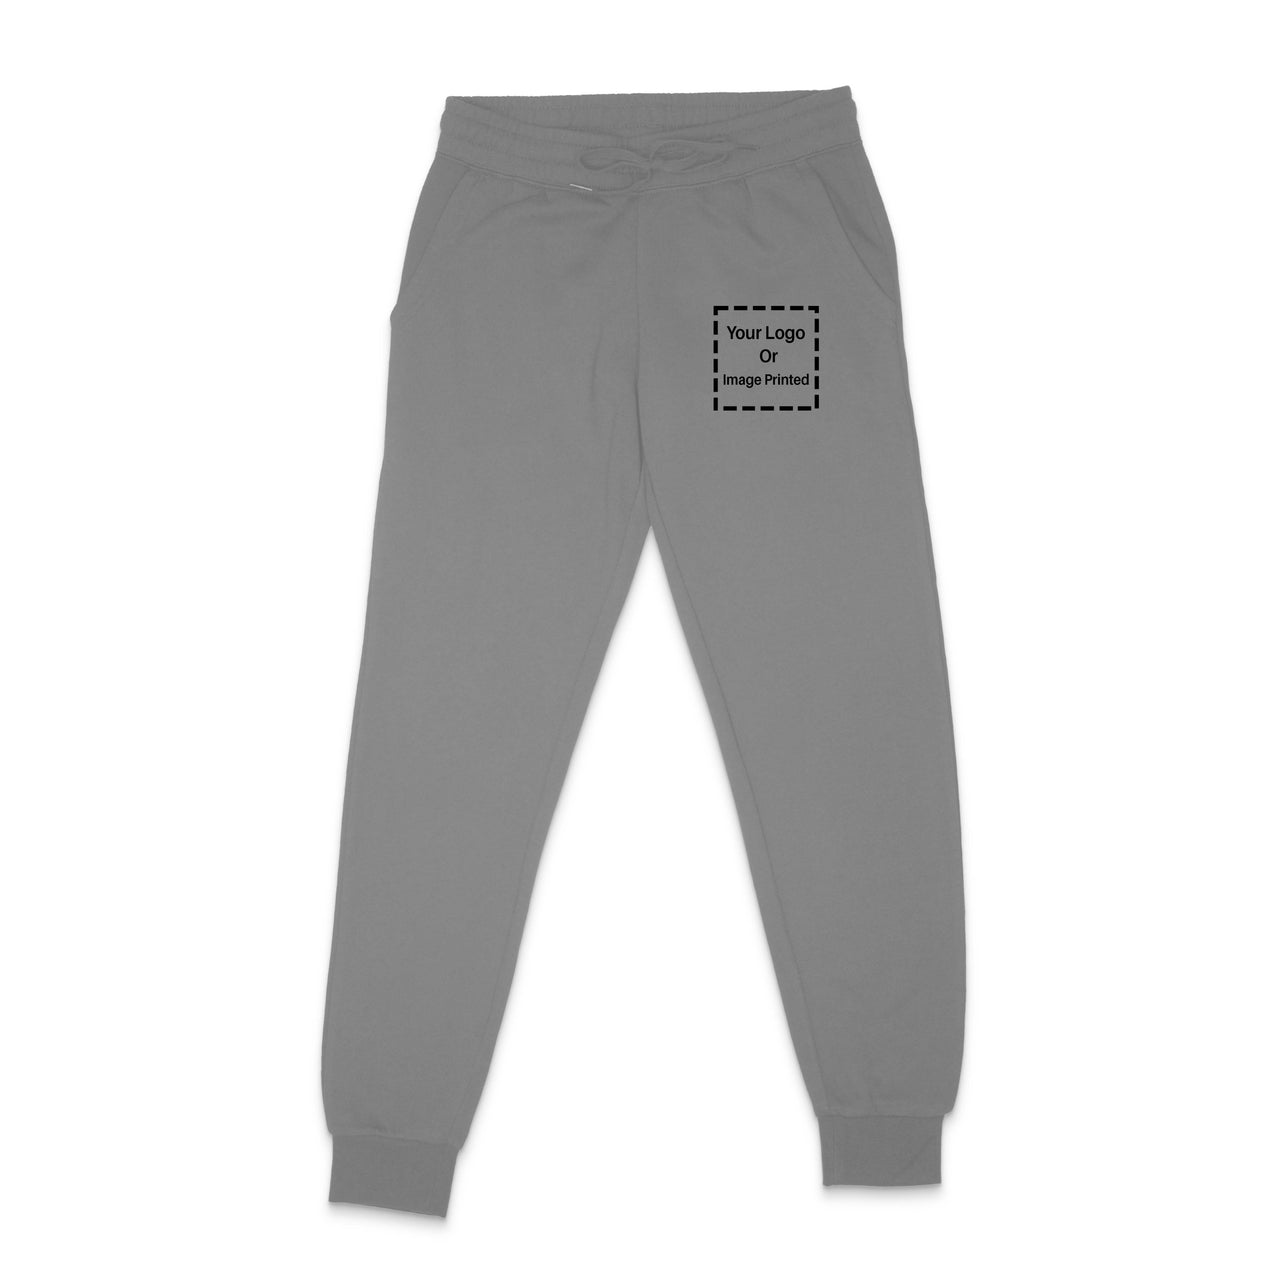 Custom Design/Image/Photo Designed Sweatpants